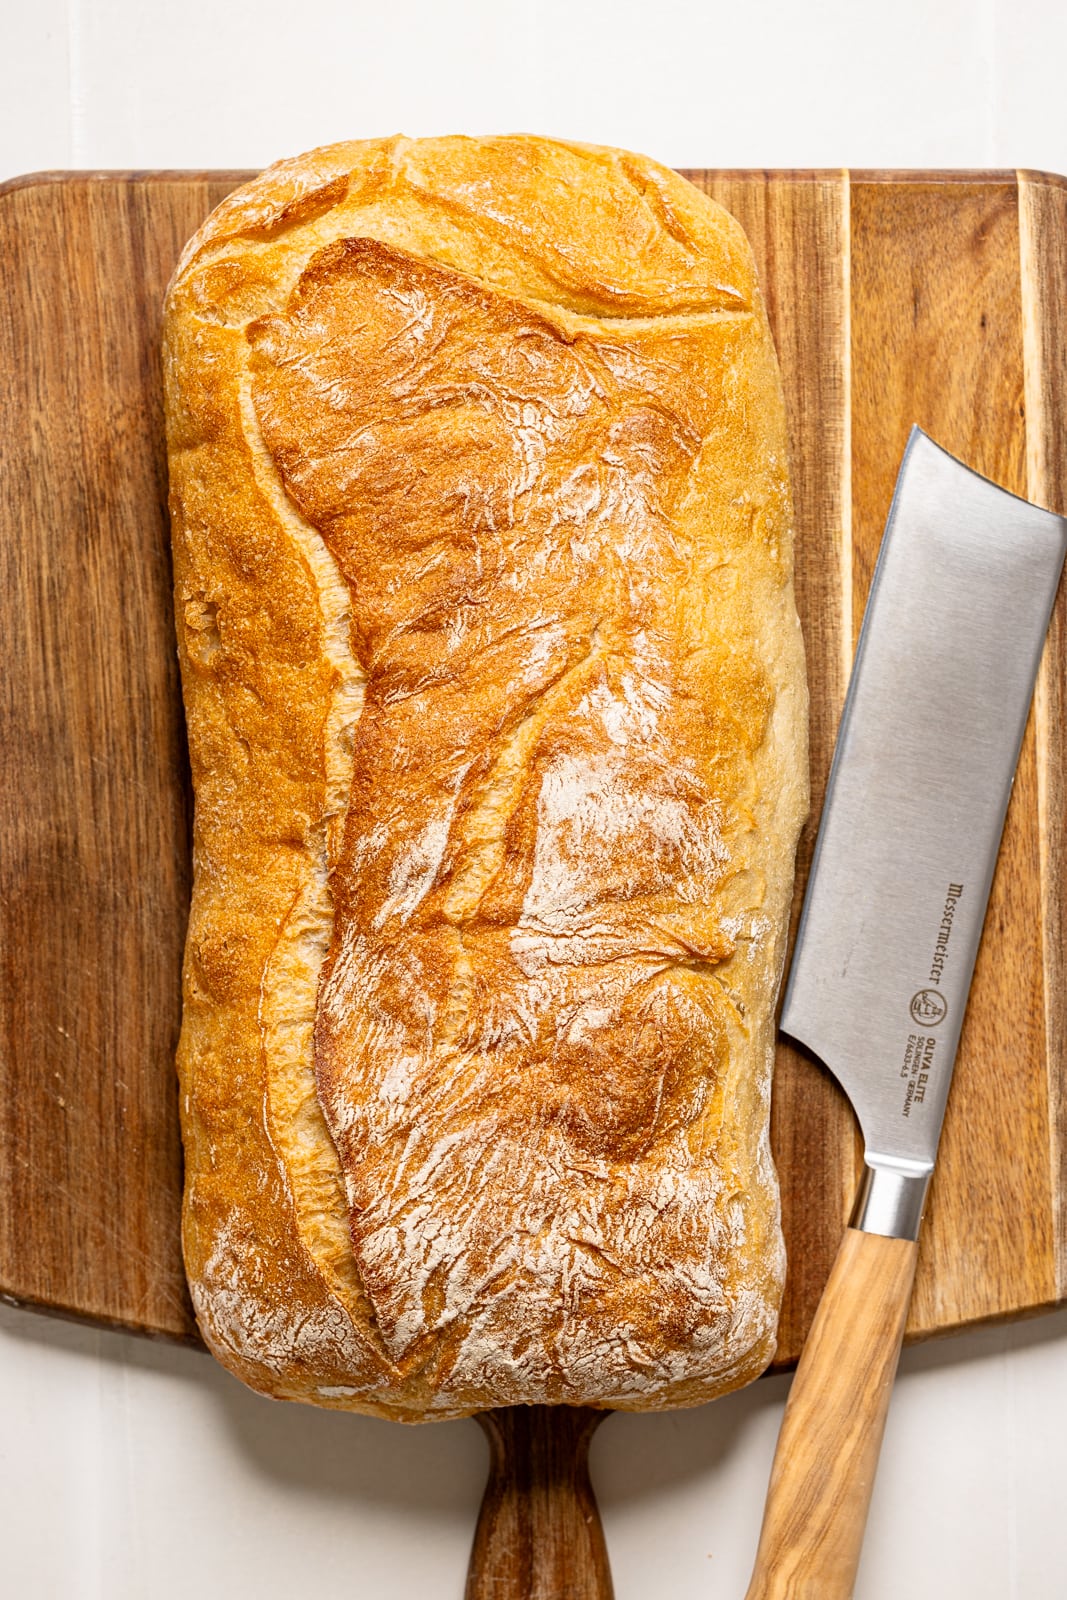 Ciabatta bread on a cutting board with a knife.